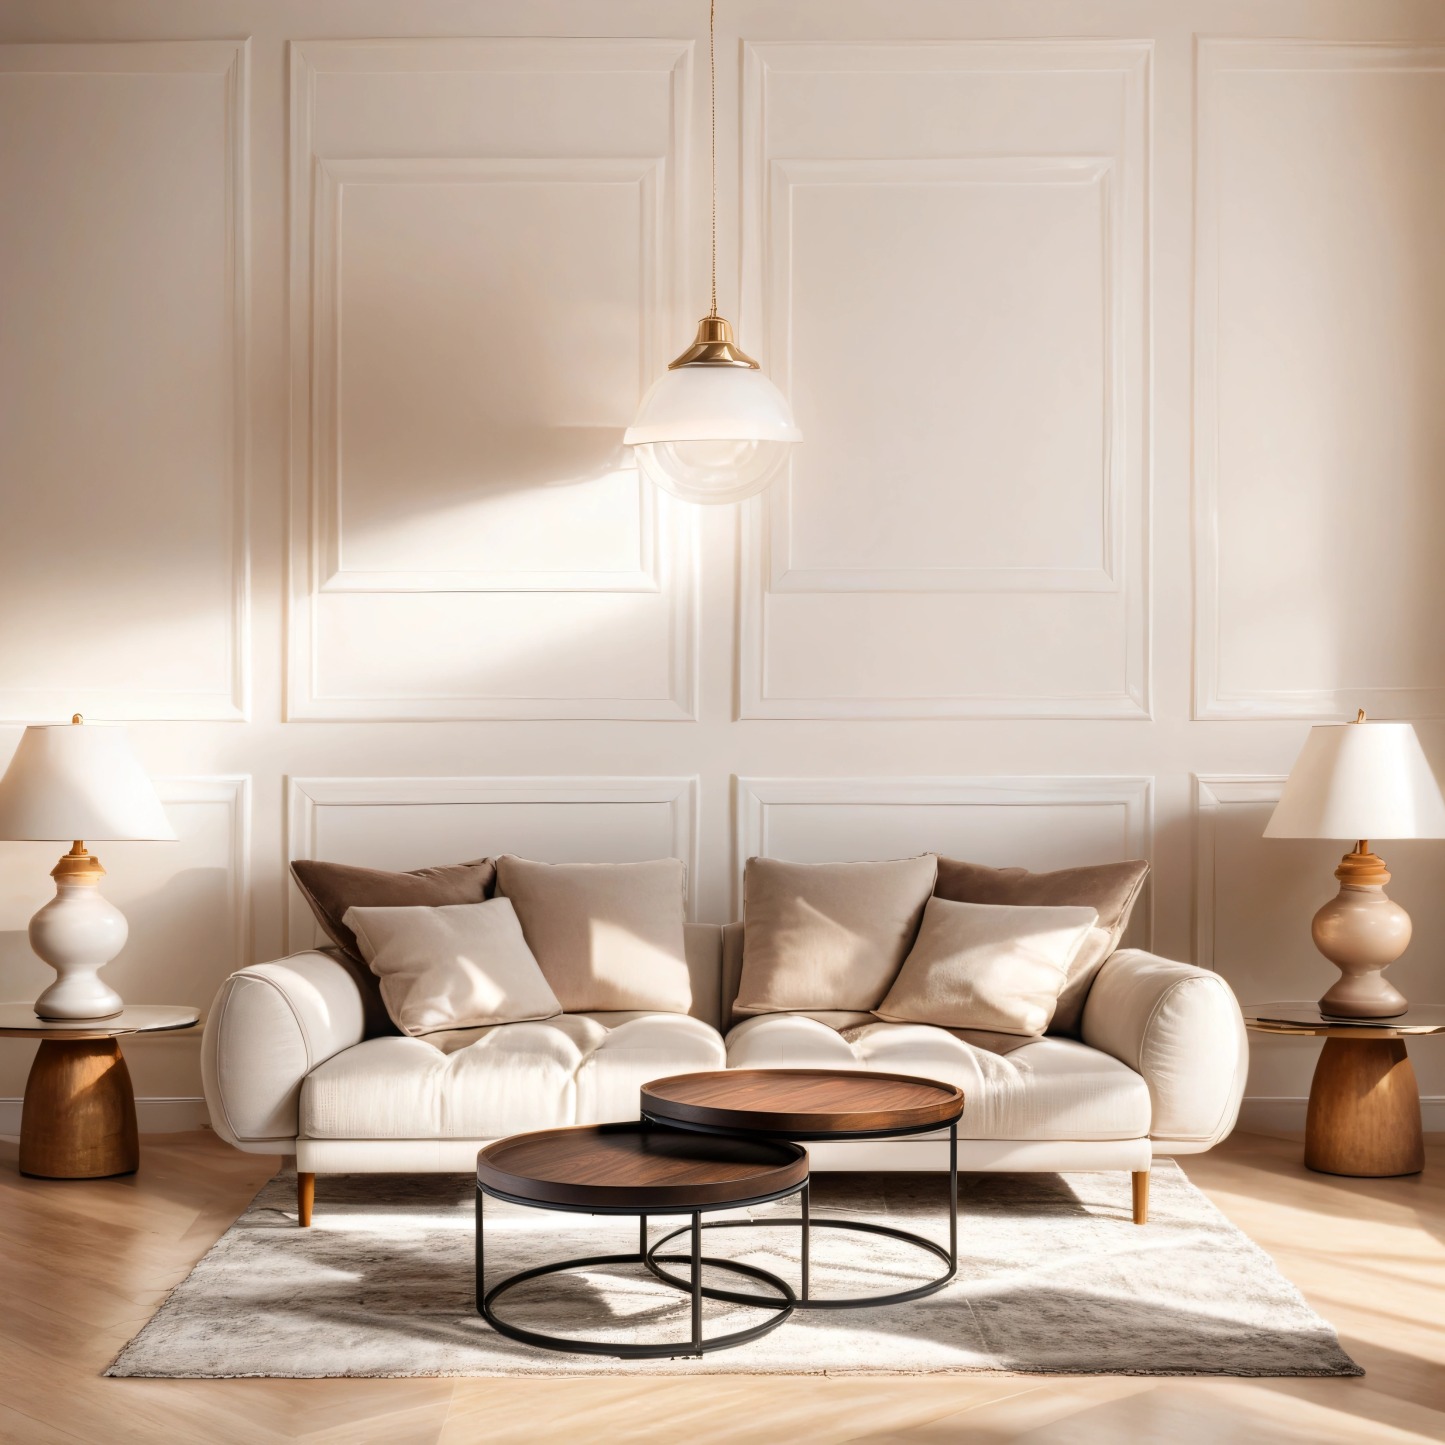 2 - Piece Modern Living Room Luxury Round Coffee Table